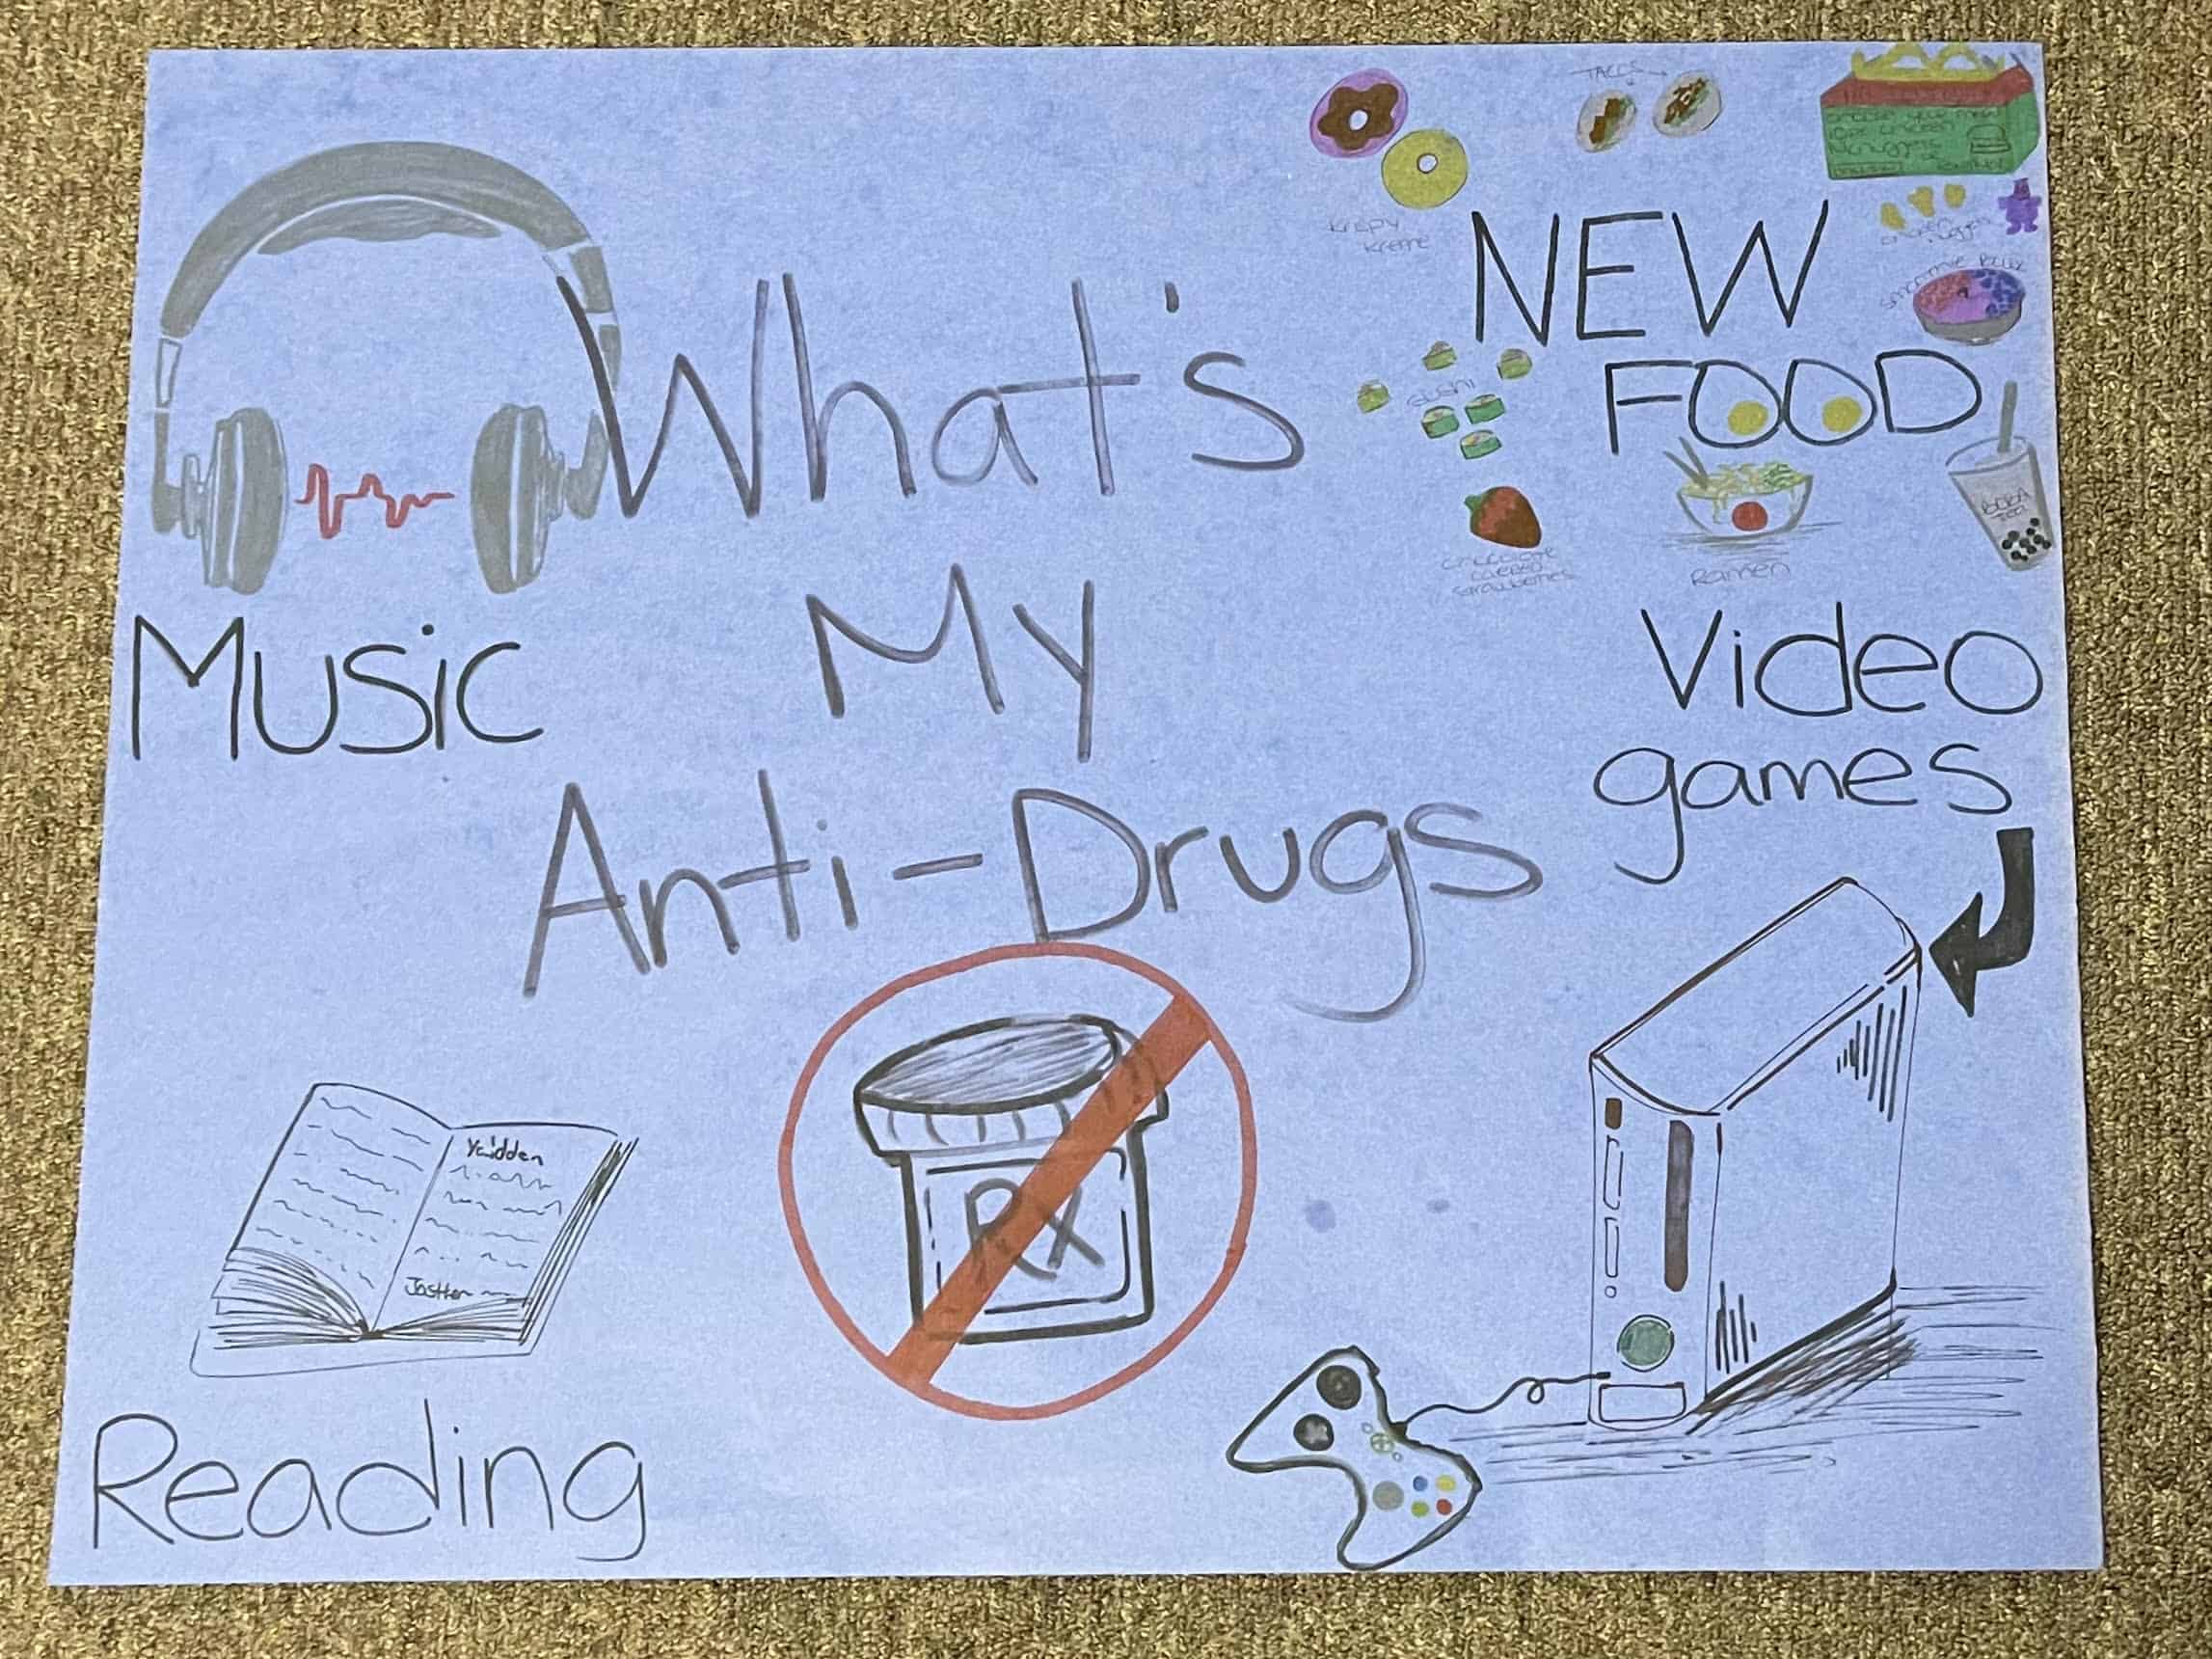 What's My Anti-Drug